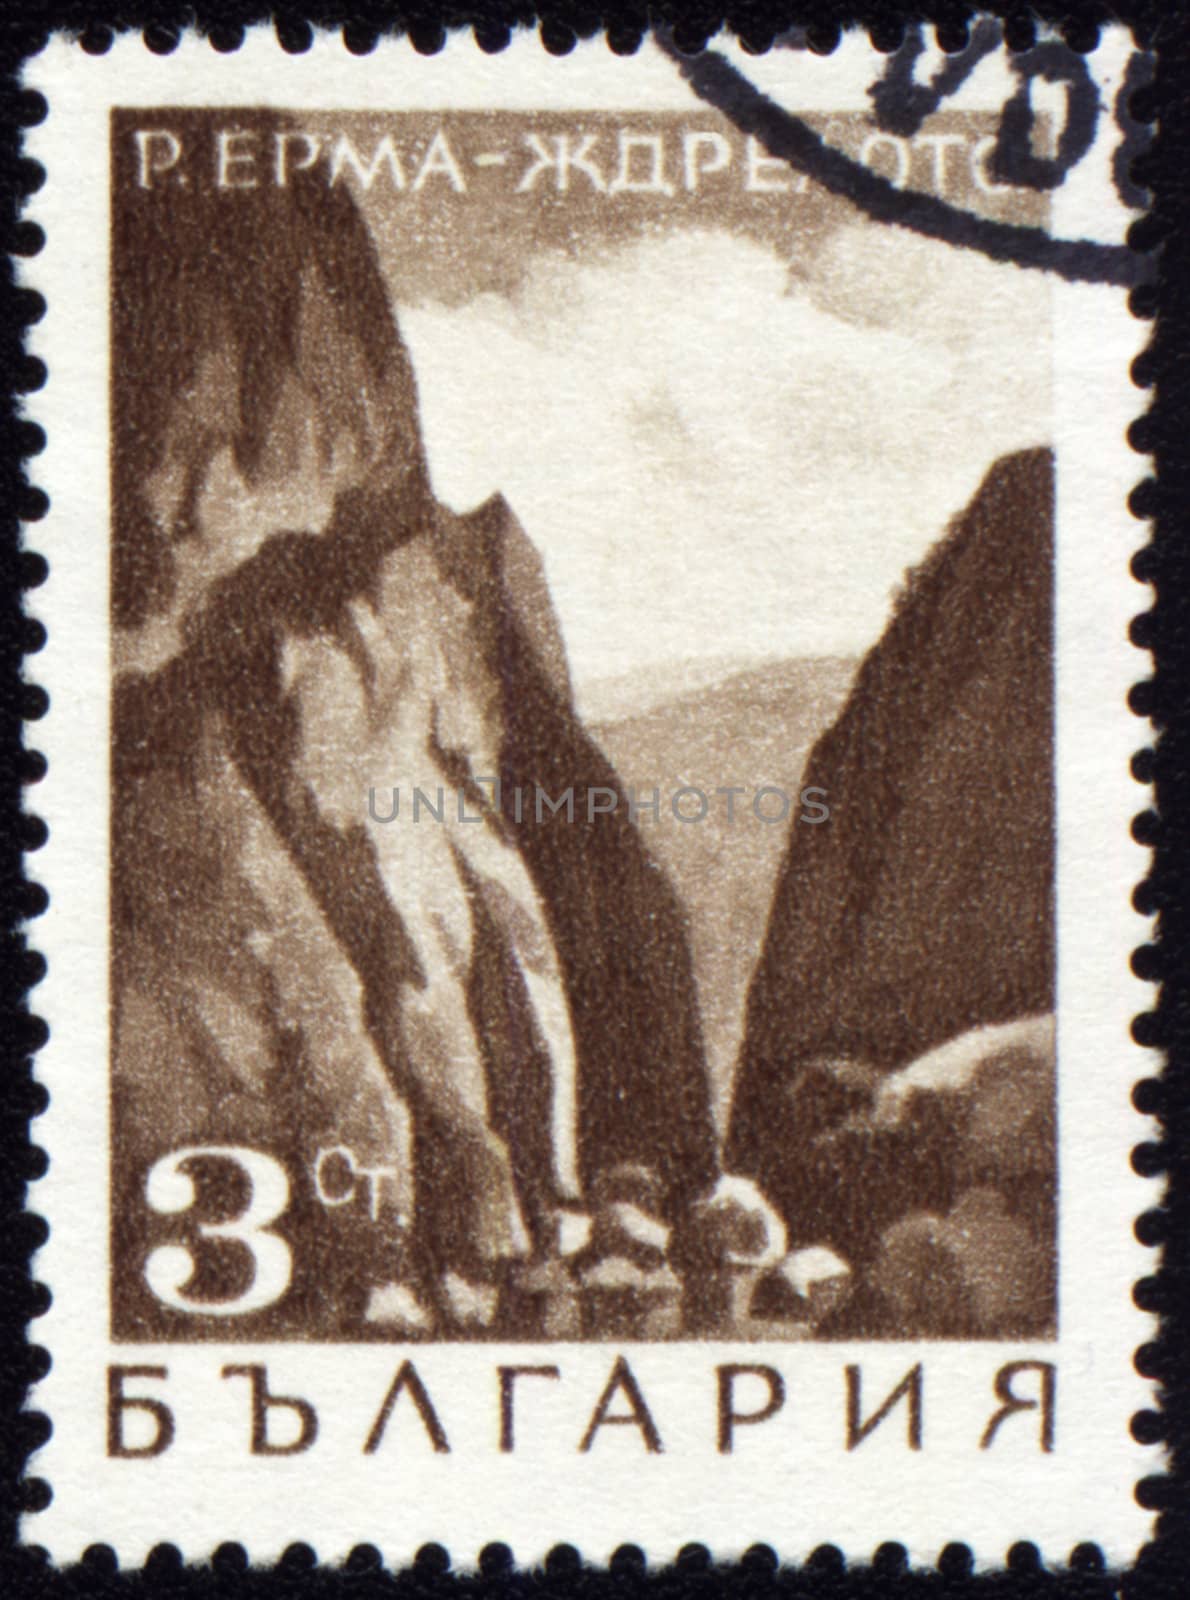 BULGARIA - CIRCA 1968: stamp printed in Bulgaria, shows canyon of Erma river, circa 1968